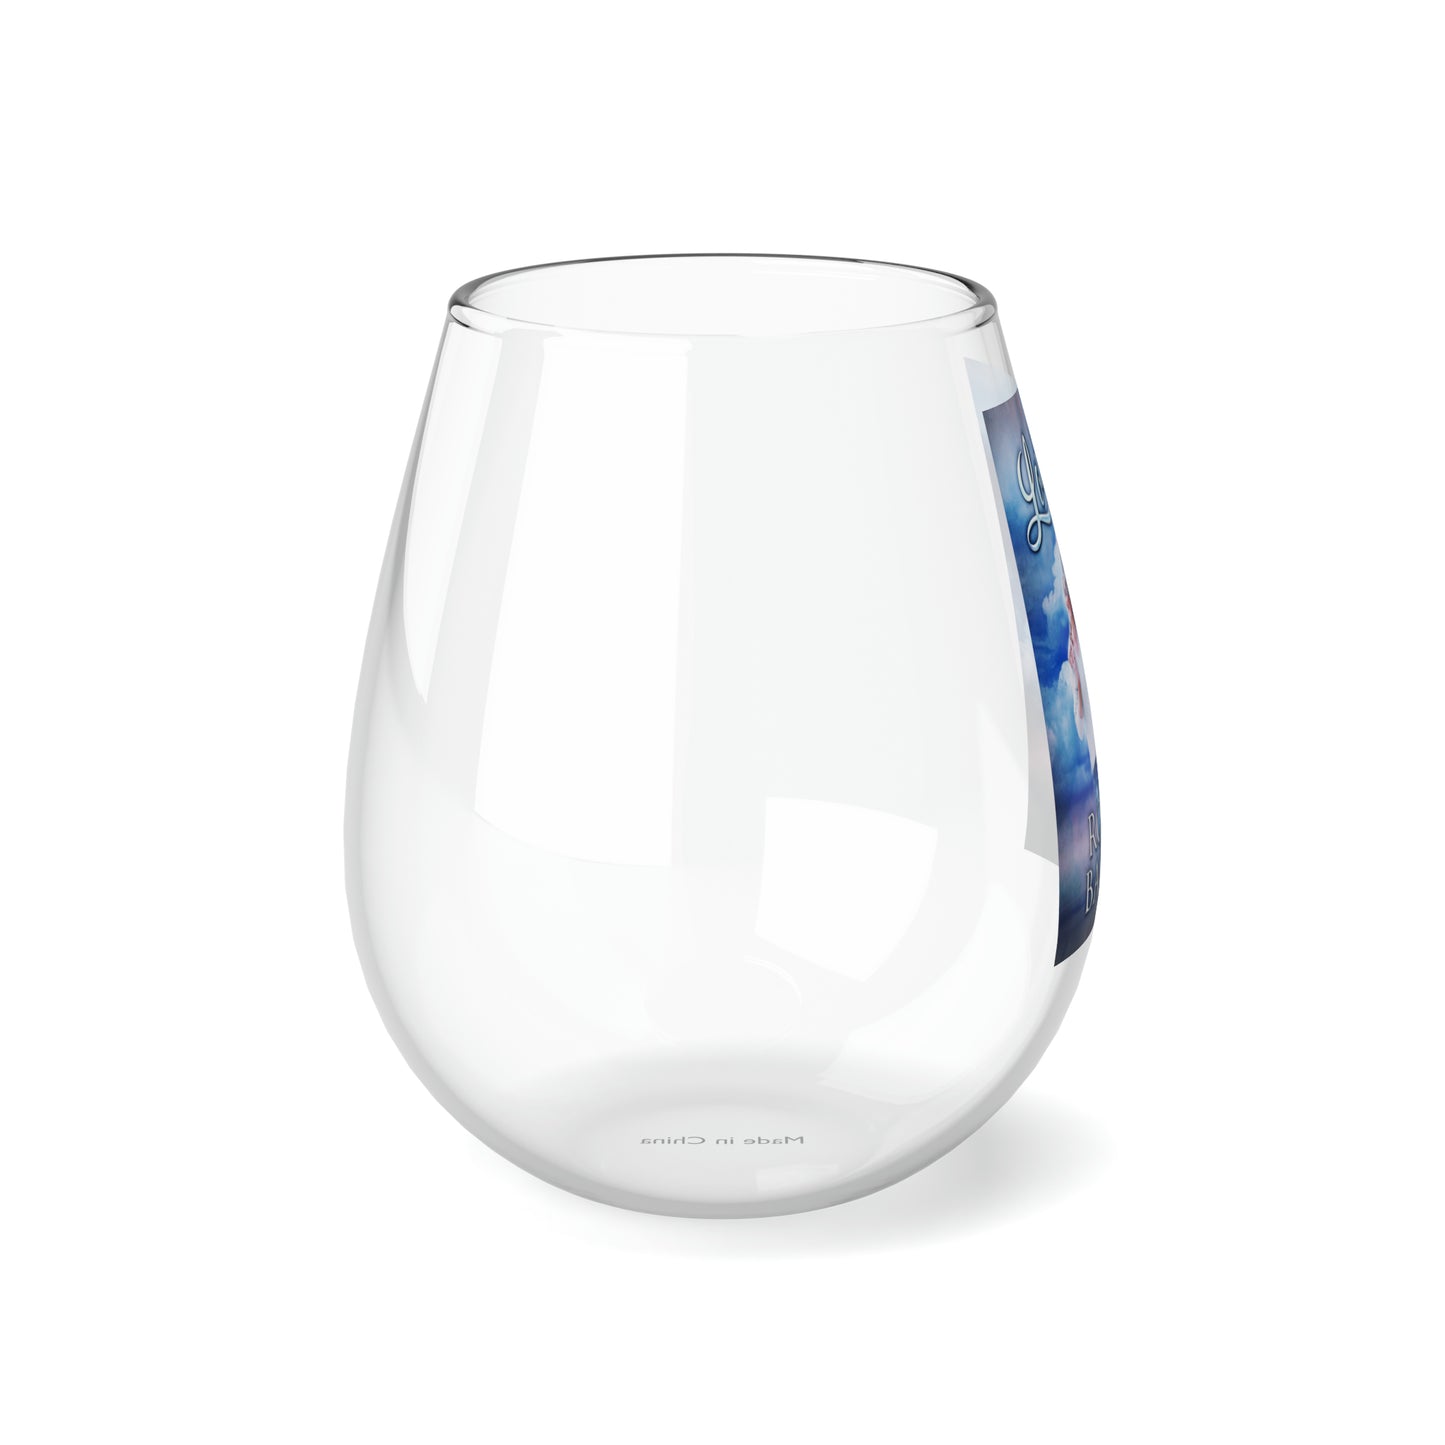 Loving Neil - Stemless Wine Glass, 11.75oz